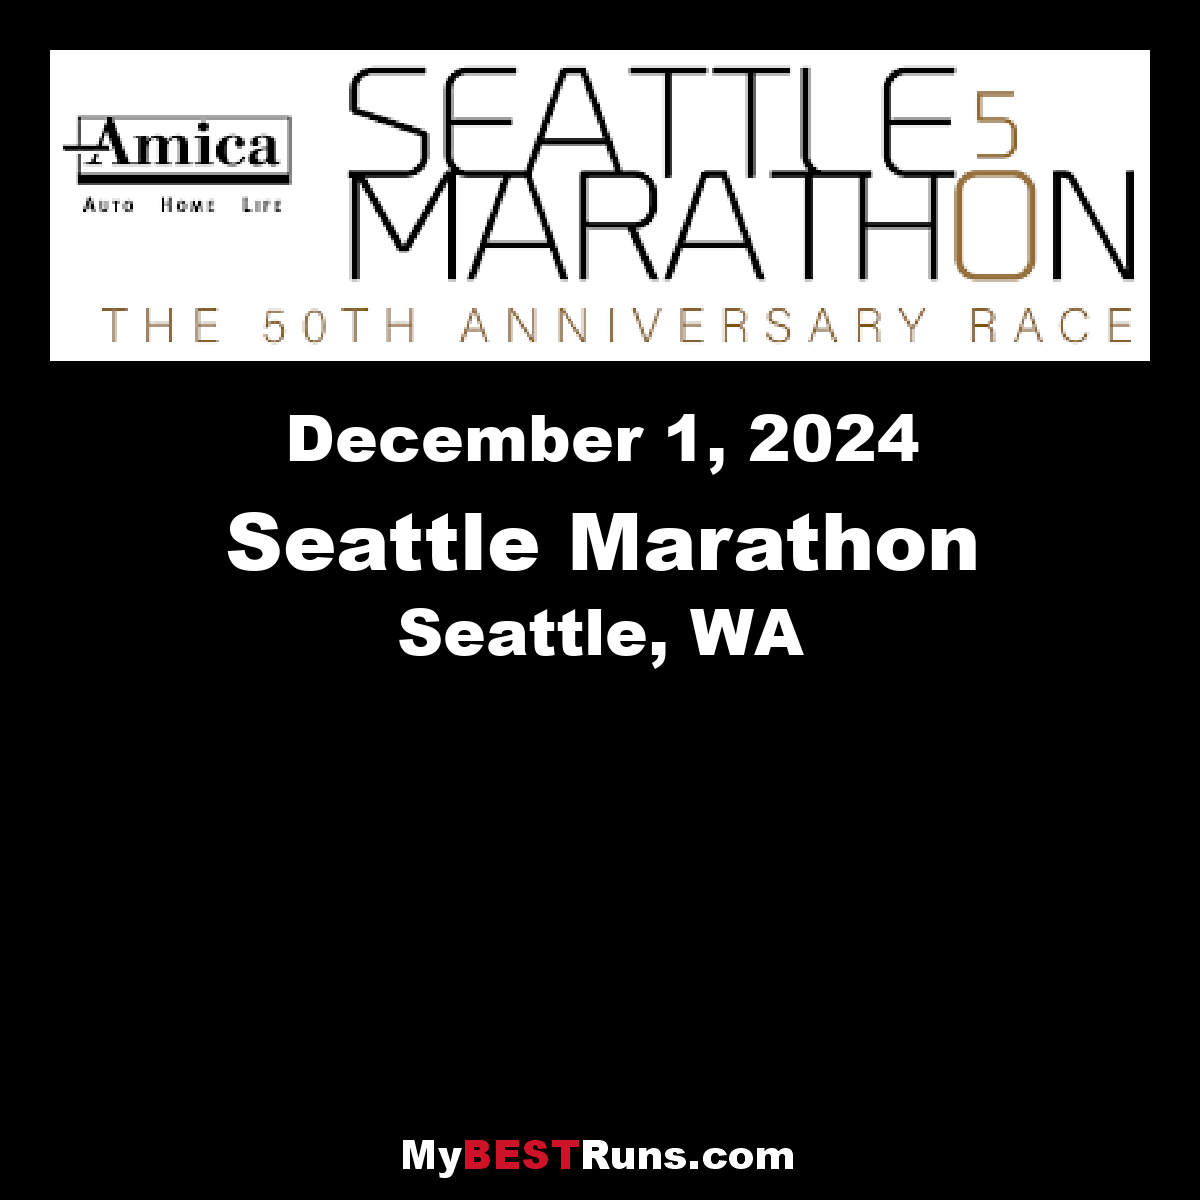 Amica Seattle Marathon 